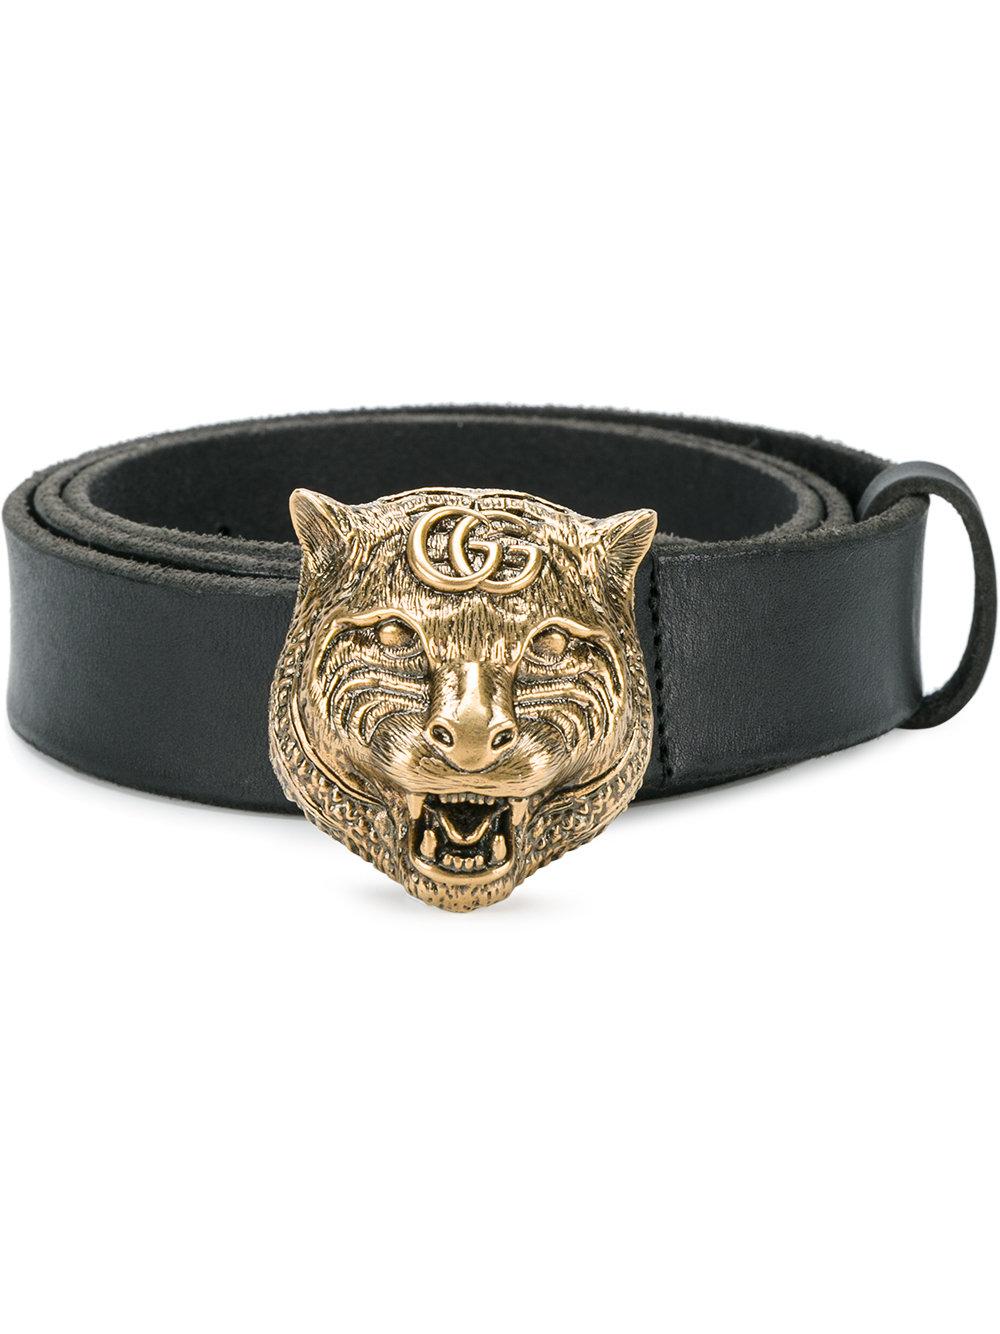 Gucci Leather Tiger Buckle Belt in Black for Men - Lyst